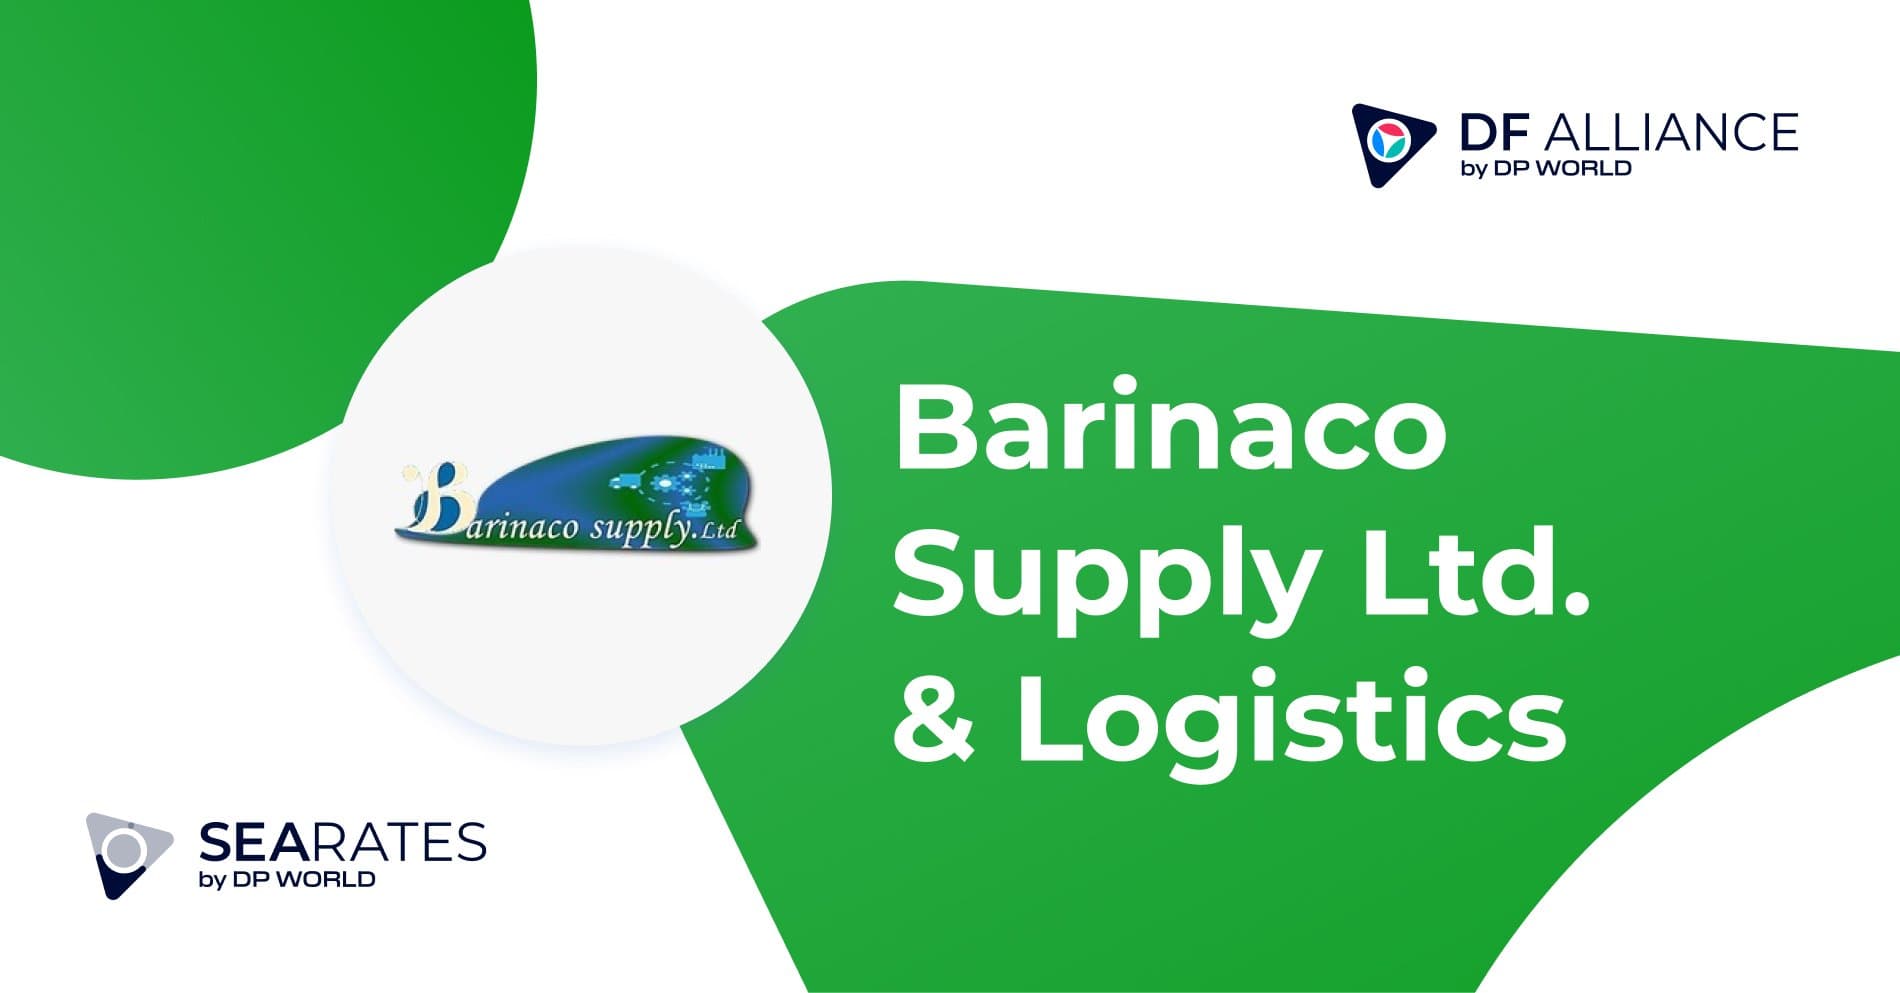 How does Barinaco Supply Ltd. & Logistics Optimize Cargo Forwarding Worldwide?